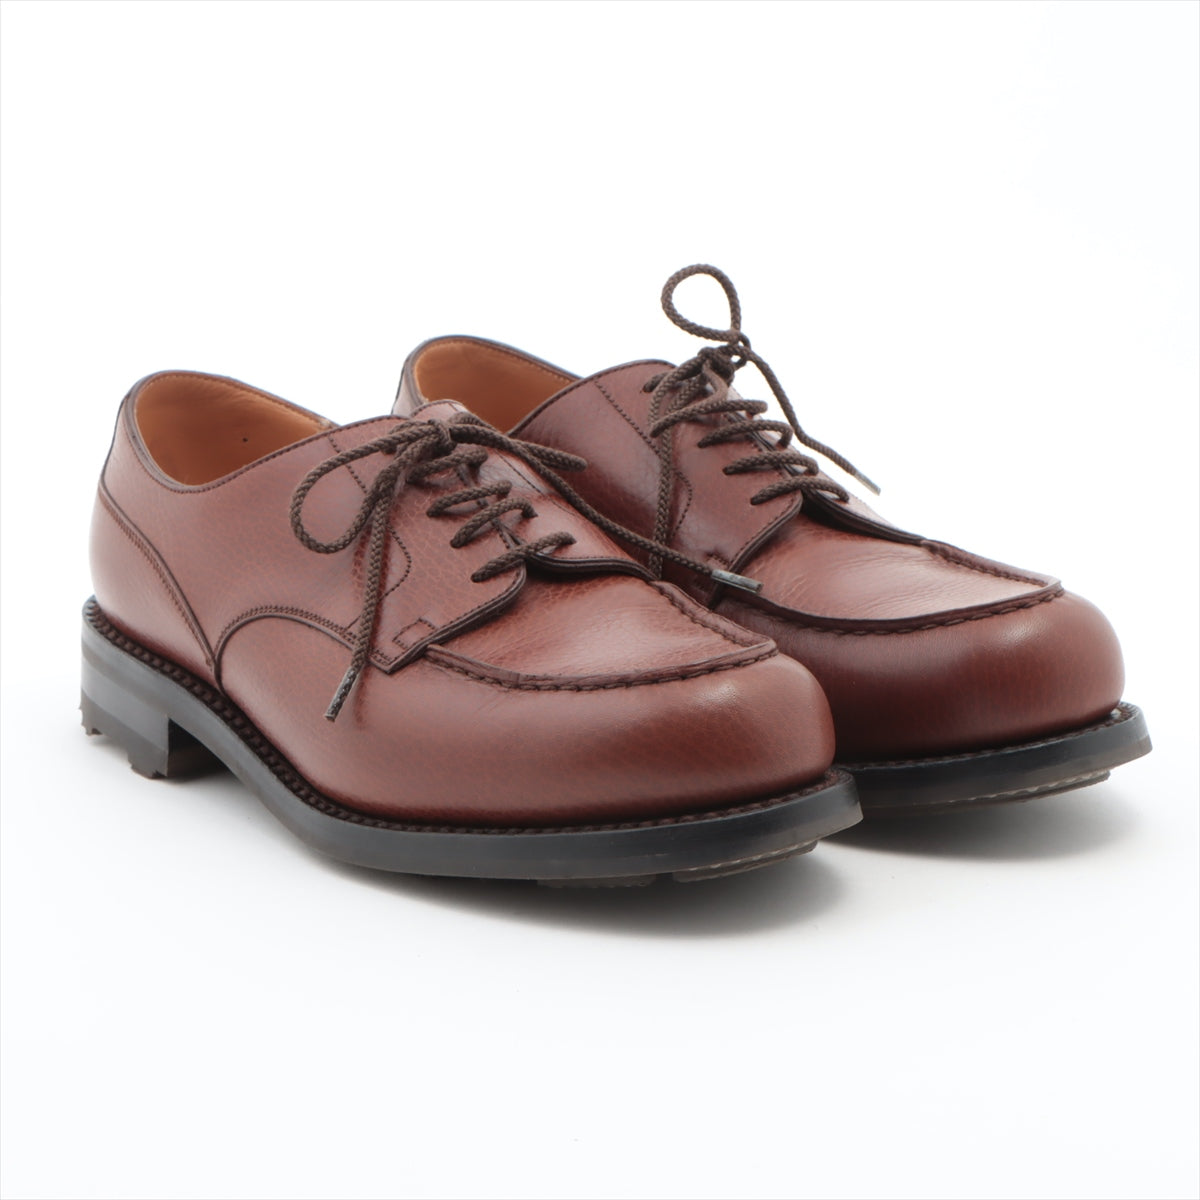 J. M. Weston Leather Leather shoes 6E Men's Brown